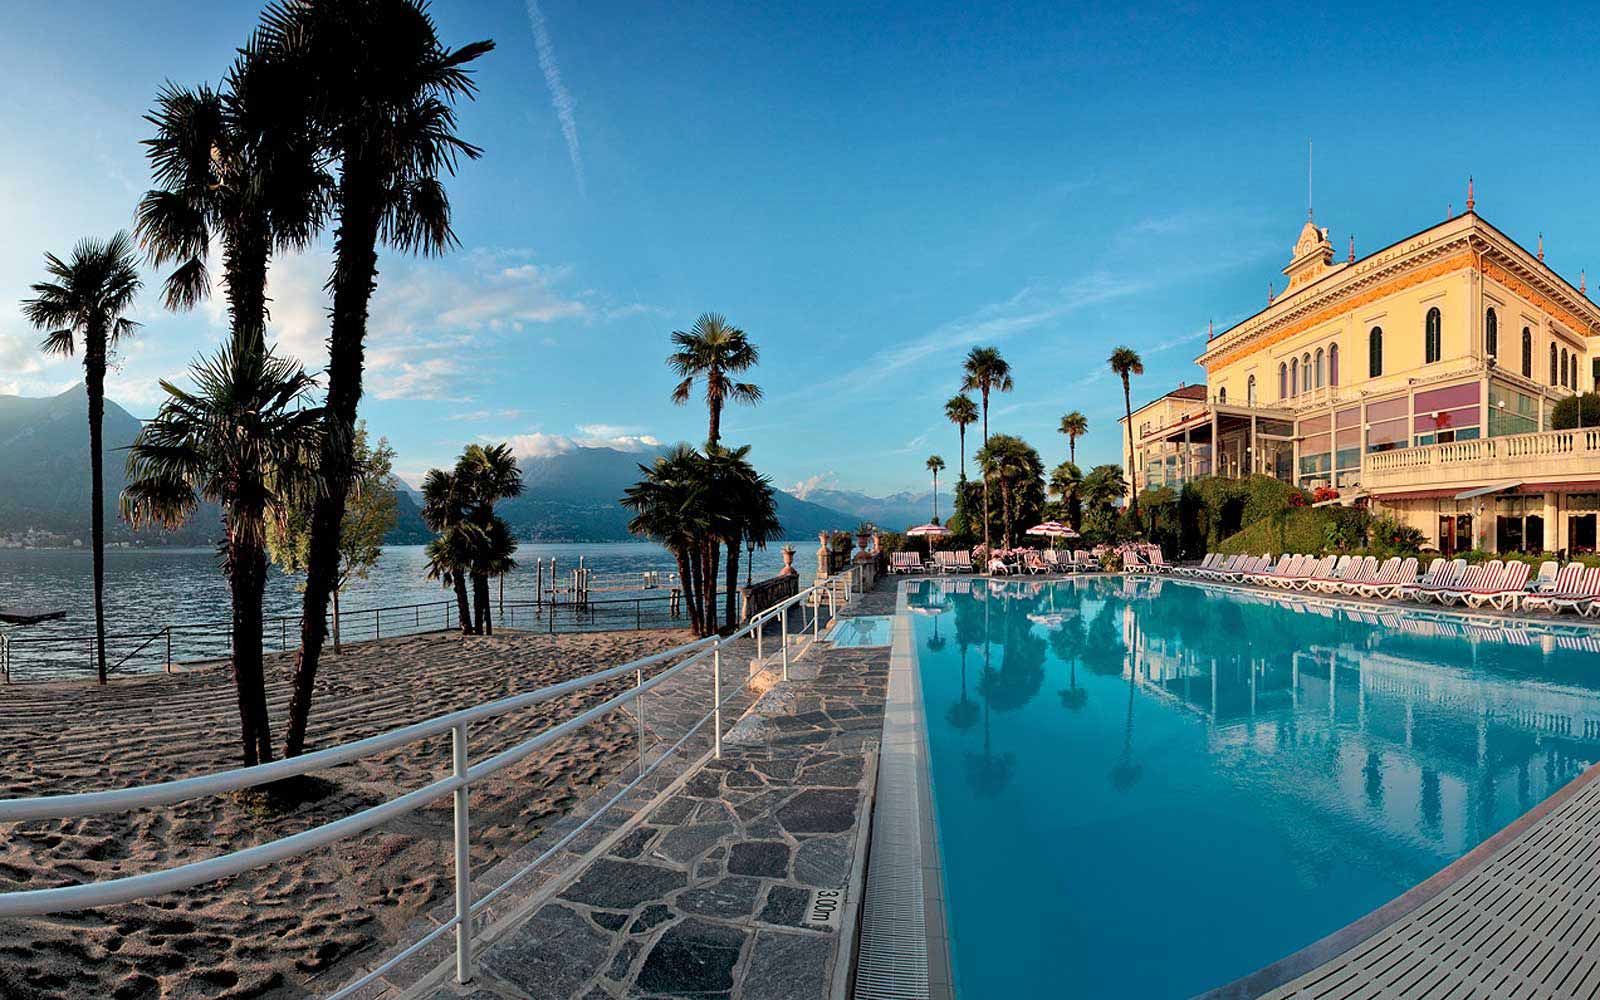 Swimming pool at Grand Hotel Villa Serbelloni